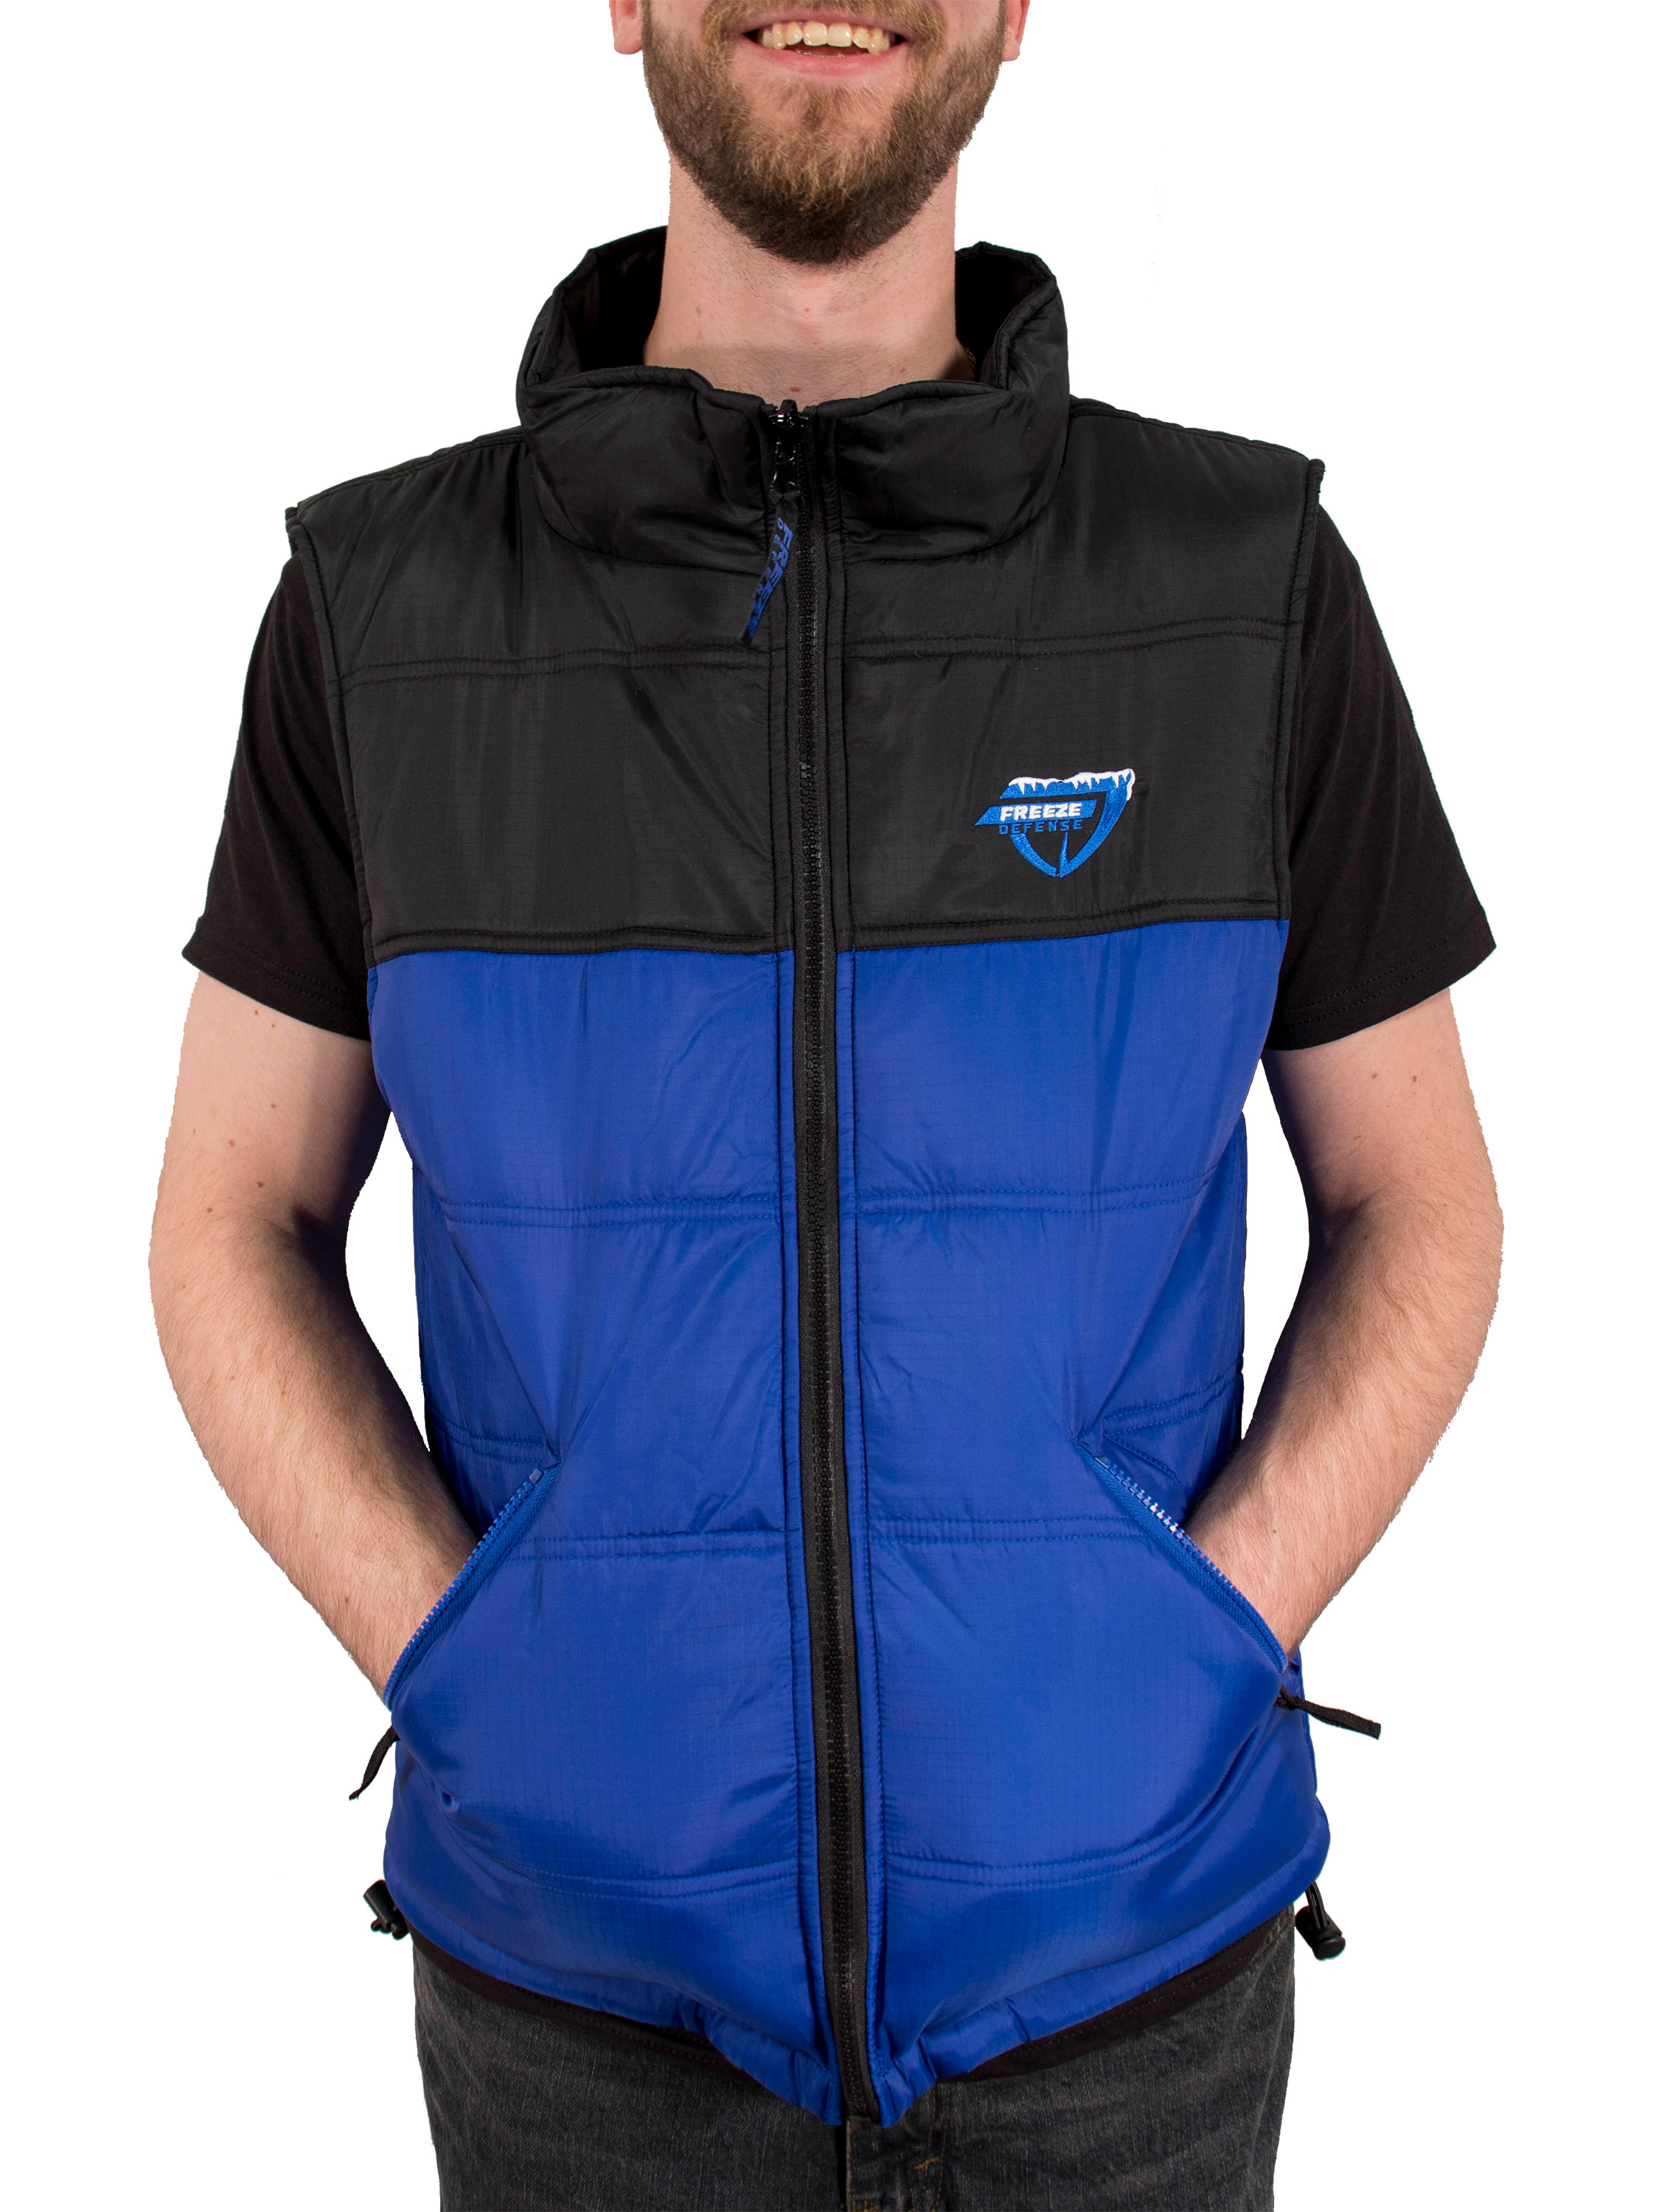 Freeze Defense Warm Men's 3in1 Winter Jacket Coat Parka & Vest (Small, Blue) - image 2 of 10